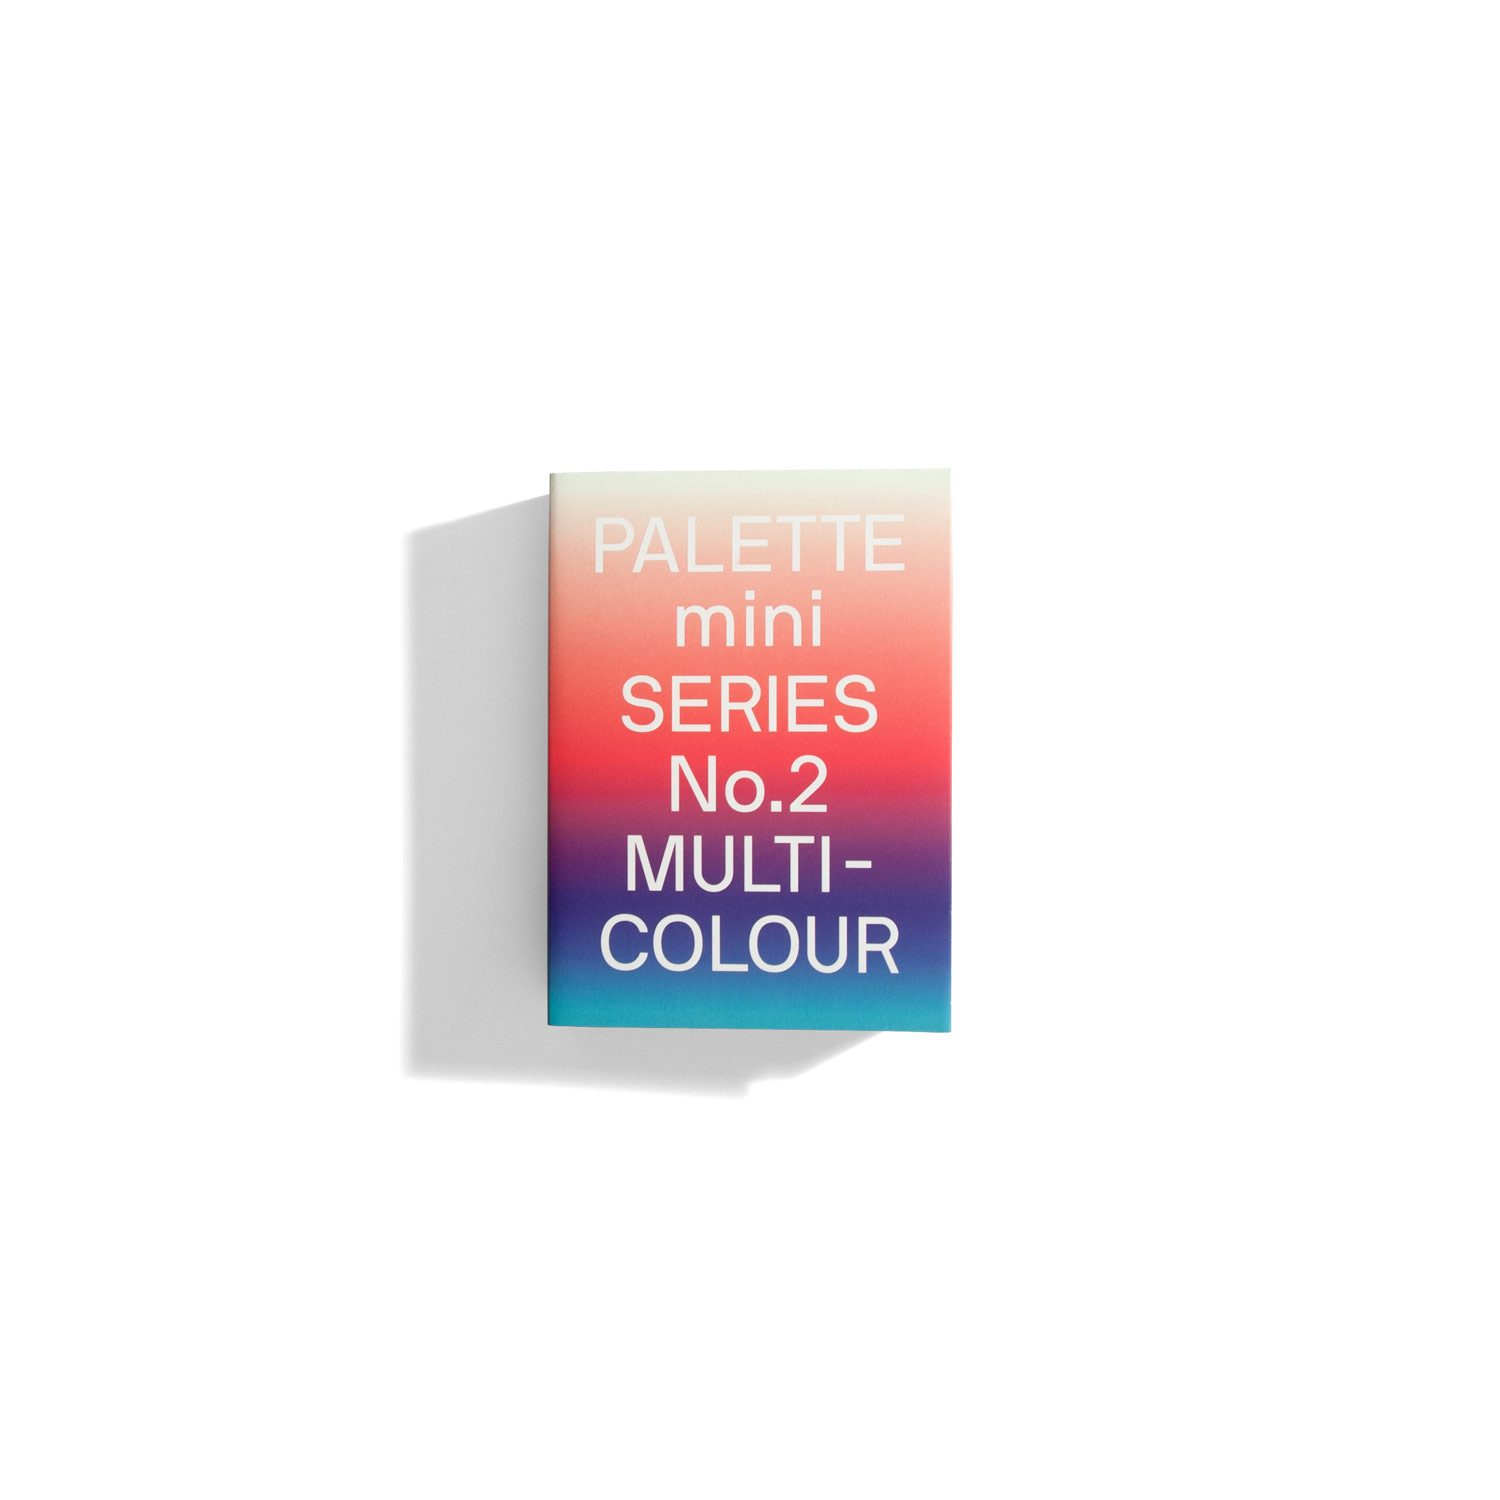 Palette mini Series #2 - Multicolour